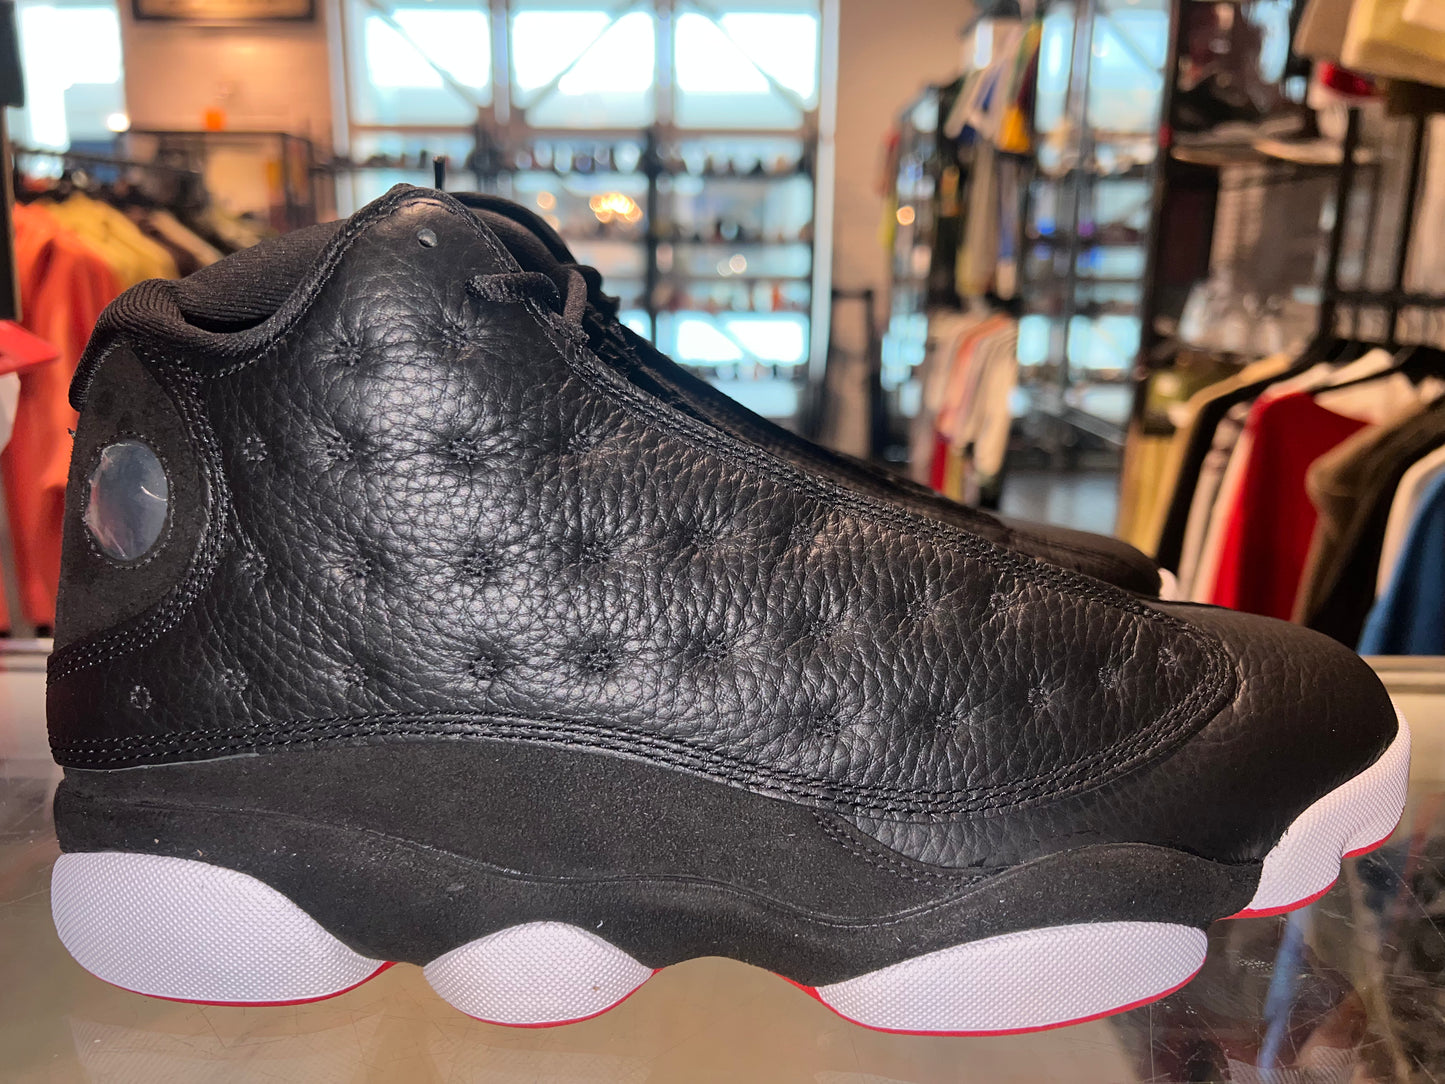 Size 12 Air Jordan 13 “Playoff” Brand New (Mall)